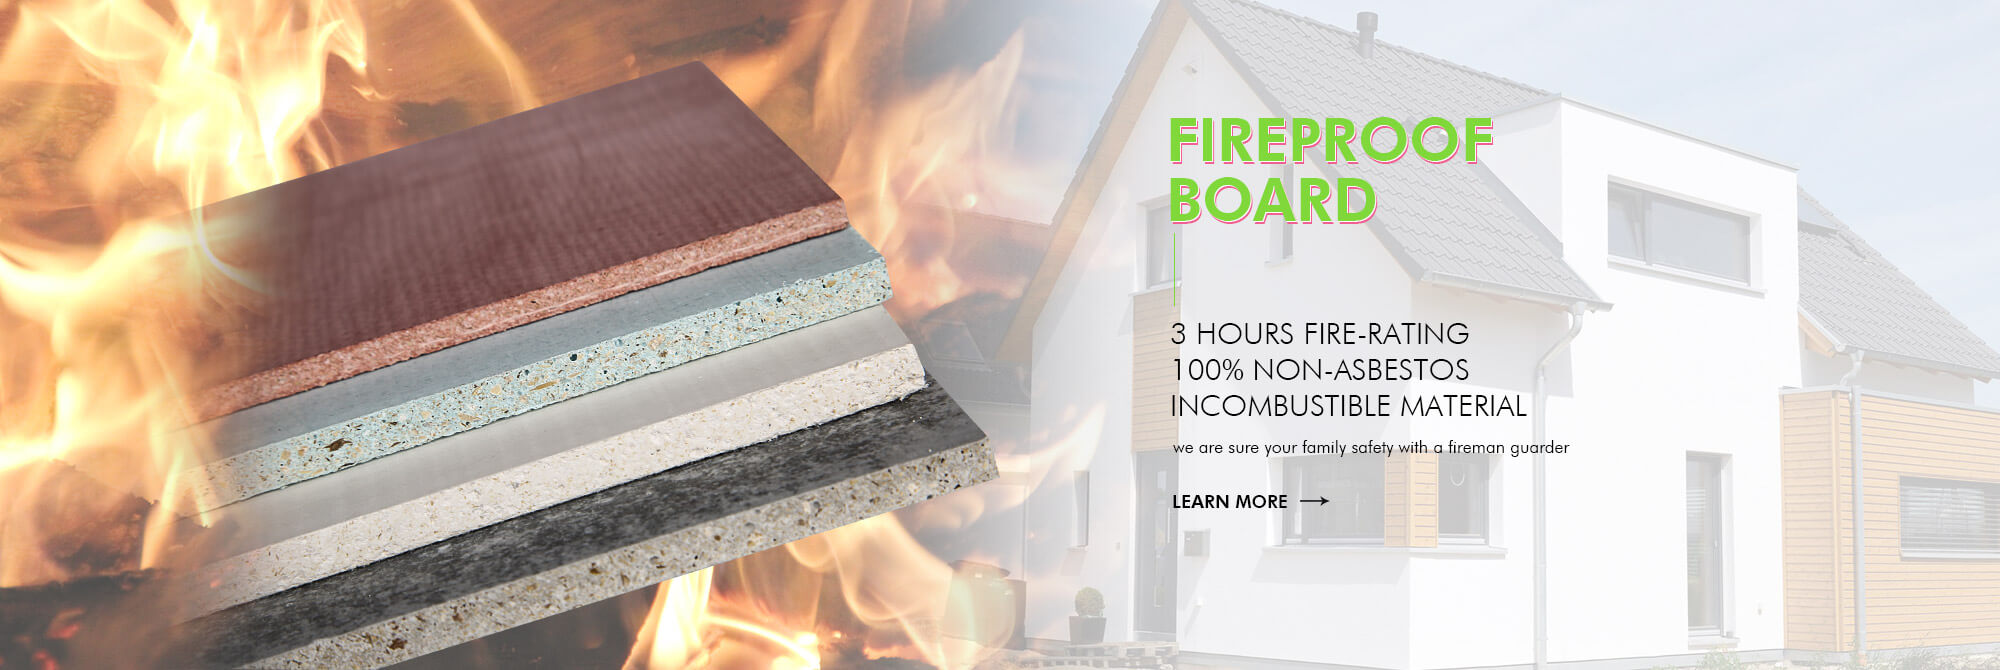 Fireproof board wholesaler